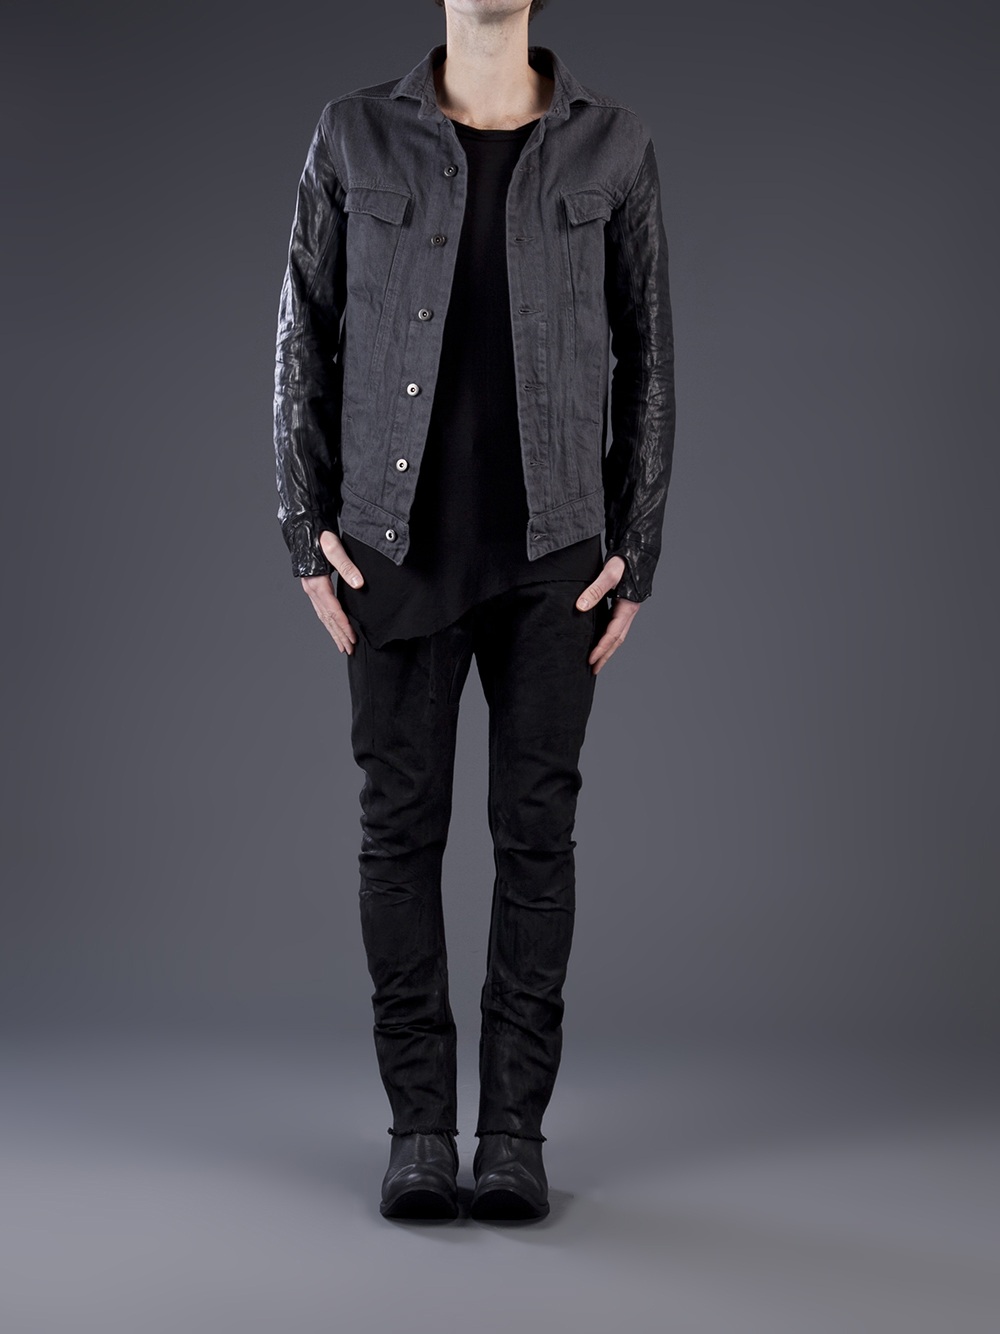 Boris Bidjan Saberi Leather Sleeve Jacket in Grey (Gray) for Men - Lyst